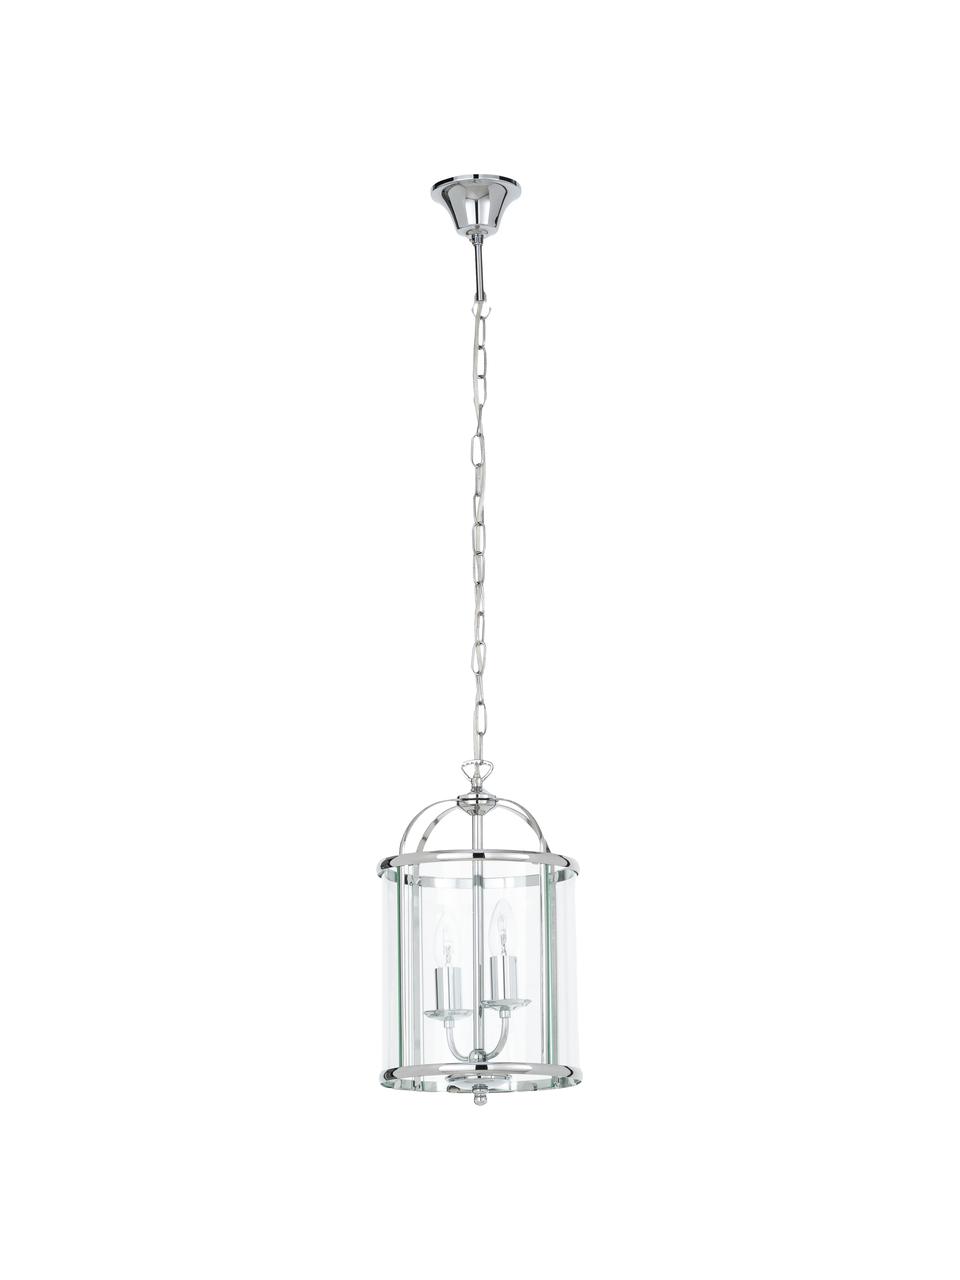 Kleine hanglamp Budgie van glas, Lampenkap: verchroomd nikkel, glas, Baldakijn: verchroomd nikkel, Chroomkleurig, transparant, Ø 23  x H 41 cm